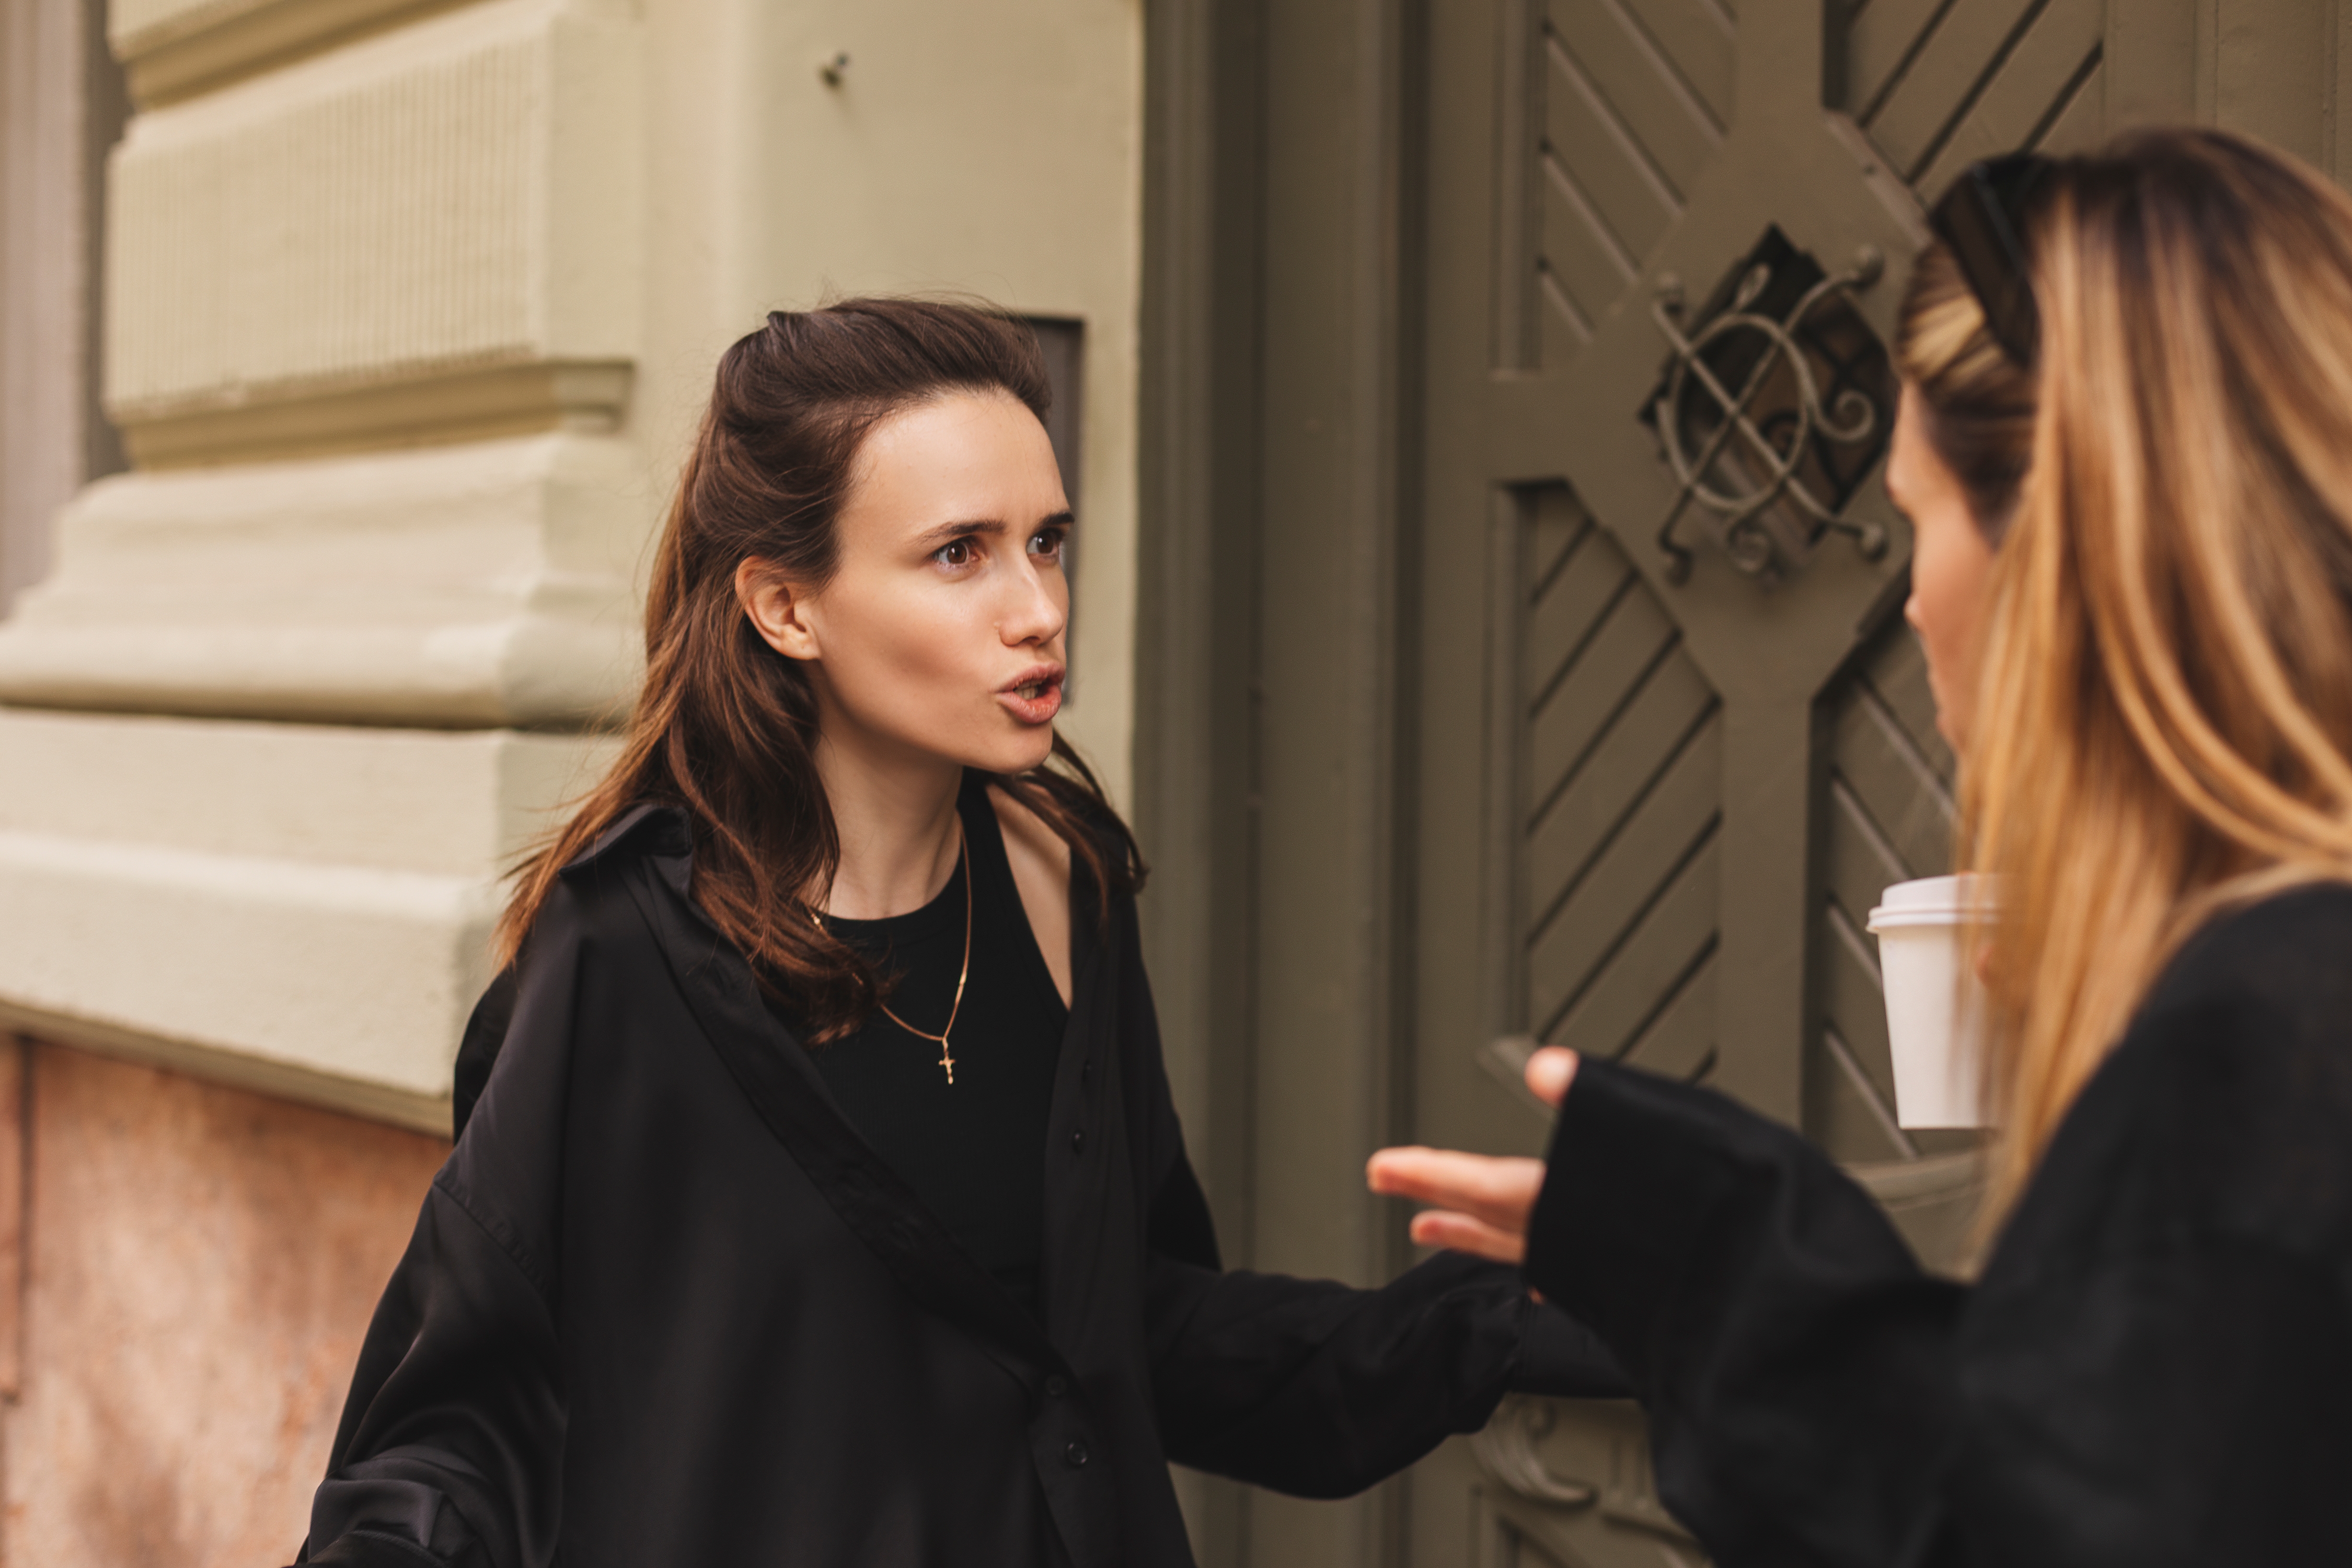 Two women having a heated conversation | Source: Shutterstock